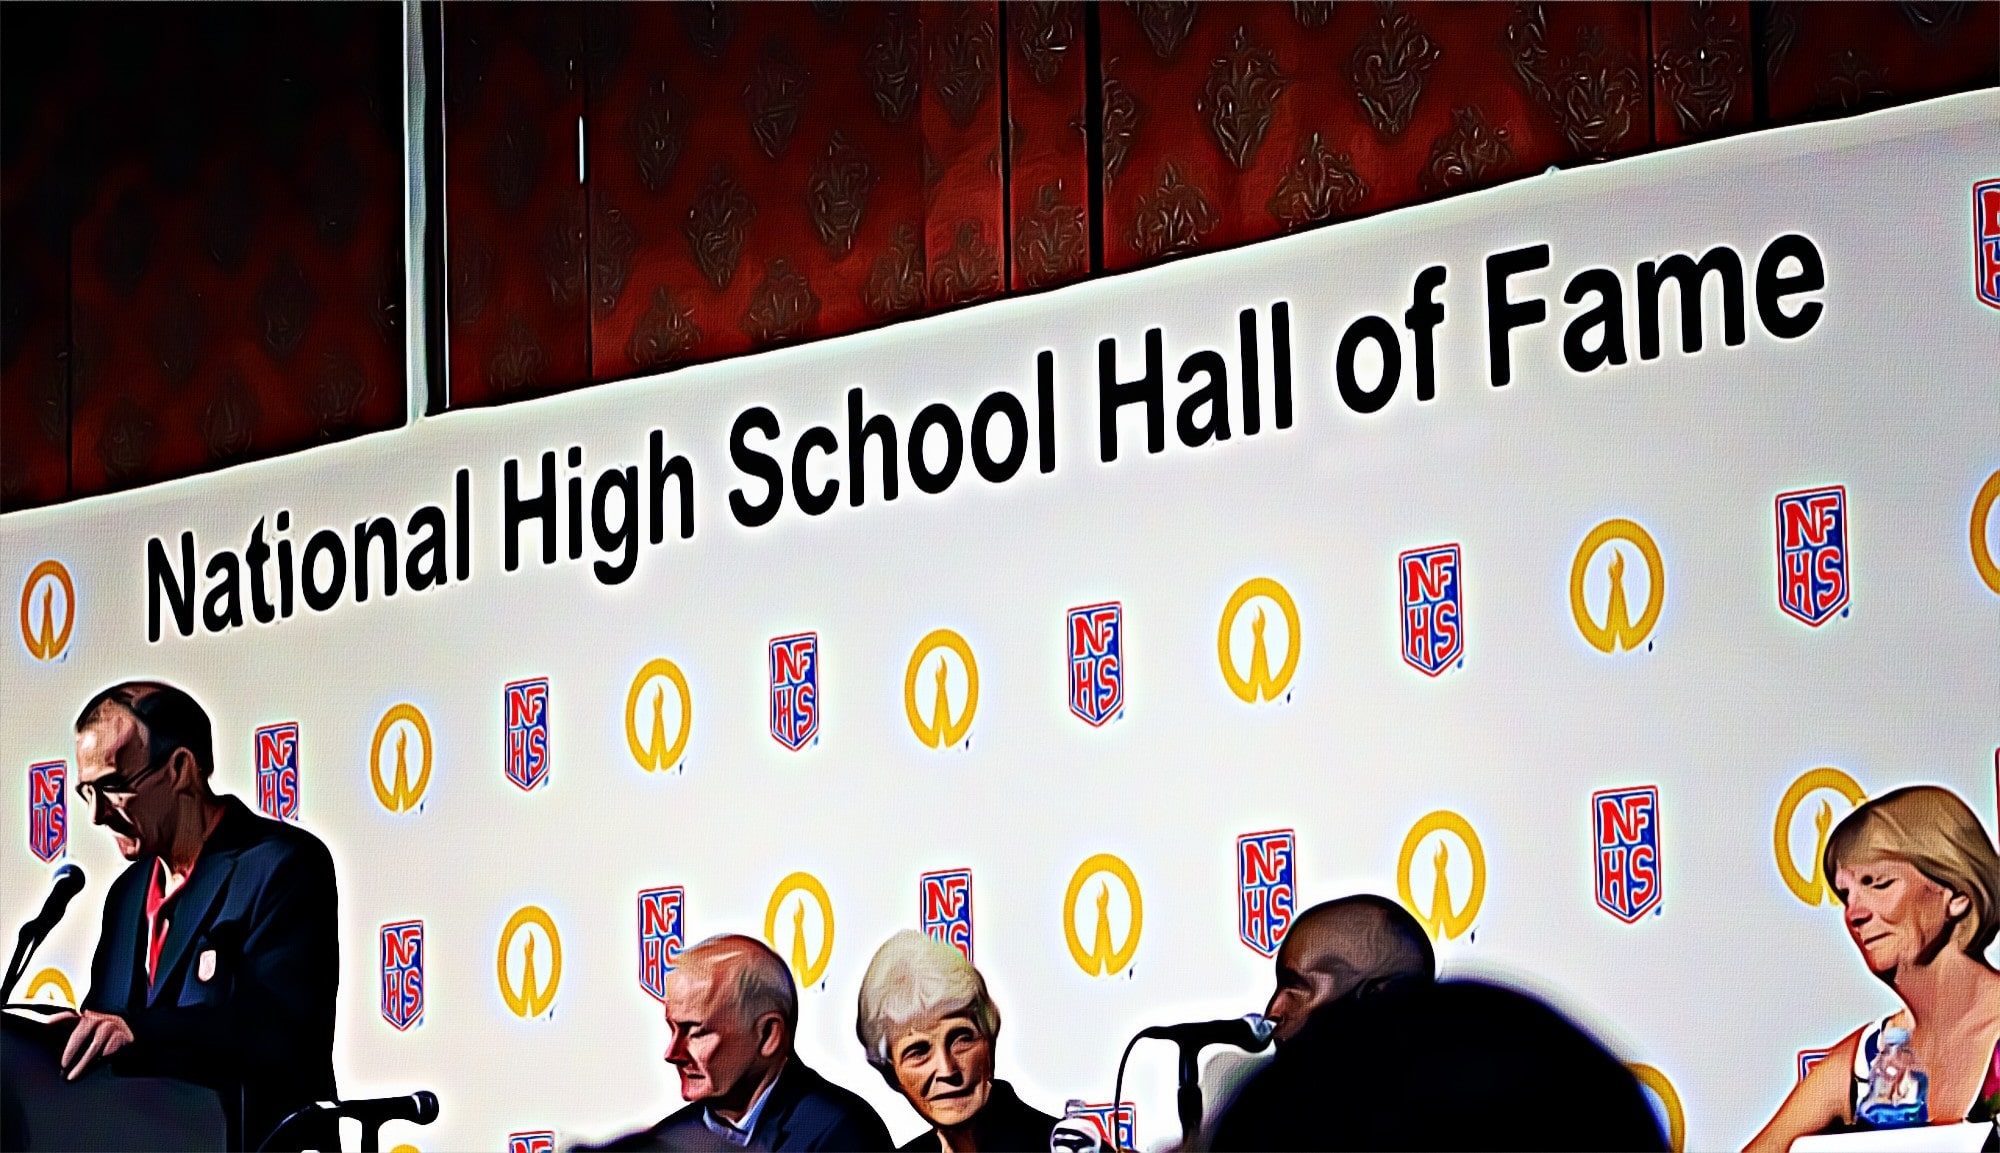 National High School Hall of Fame